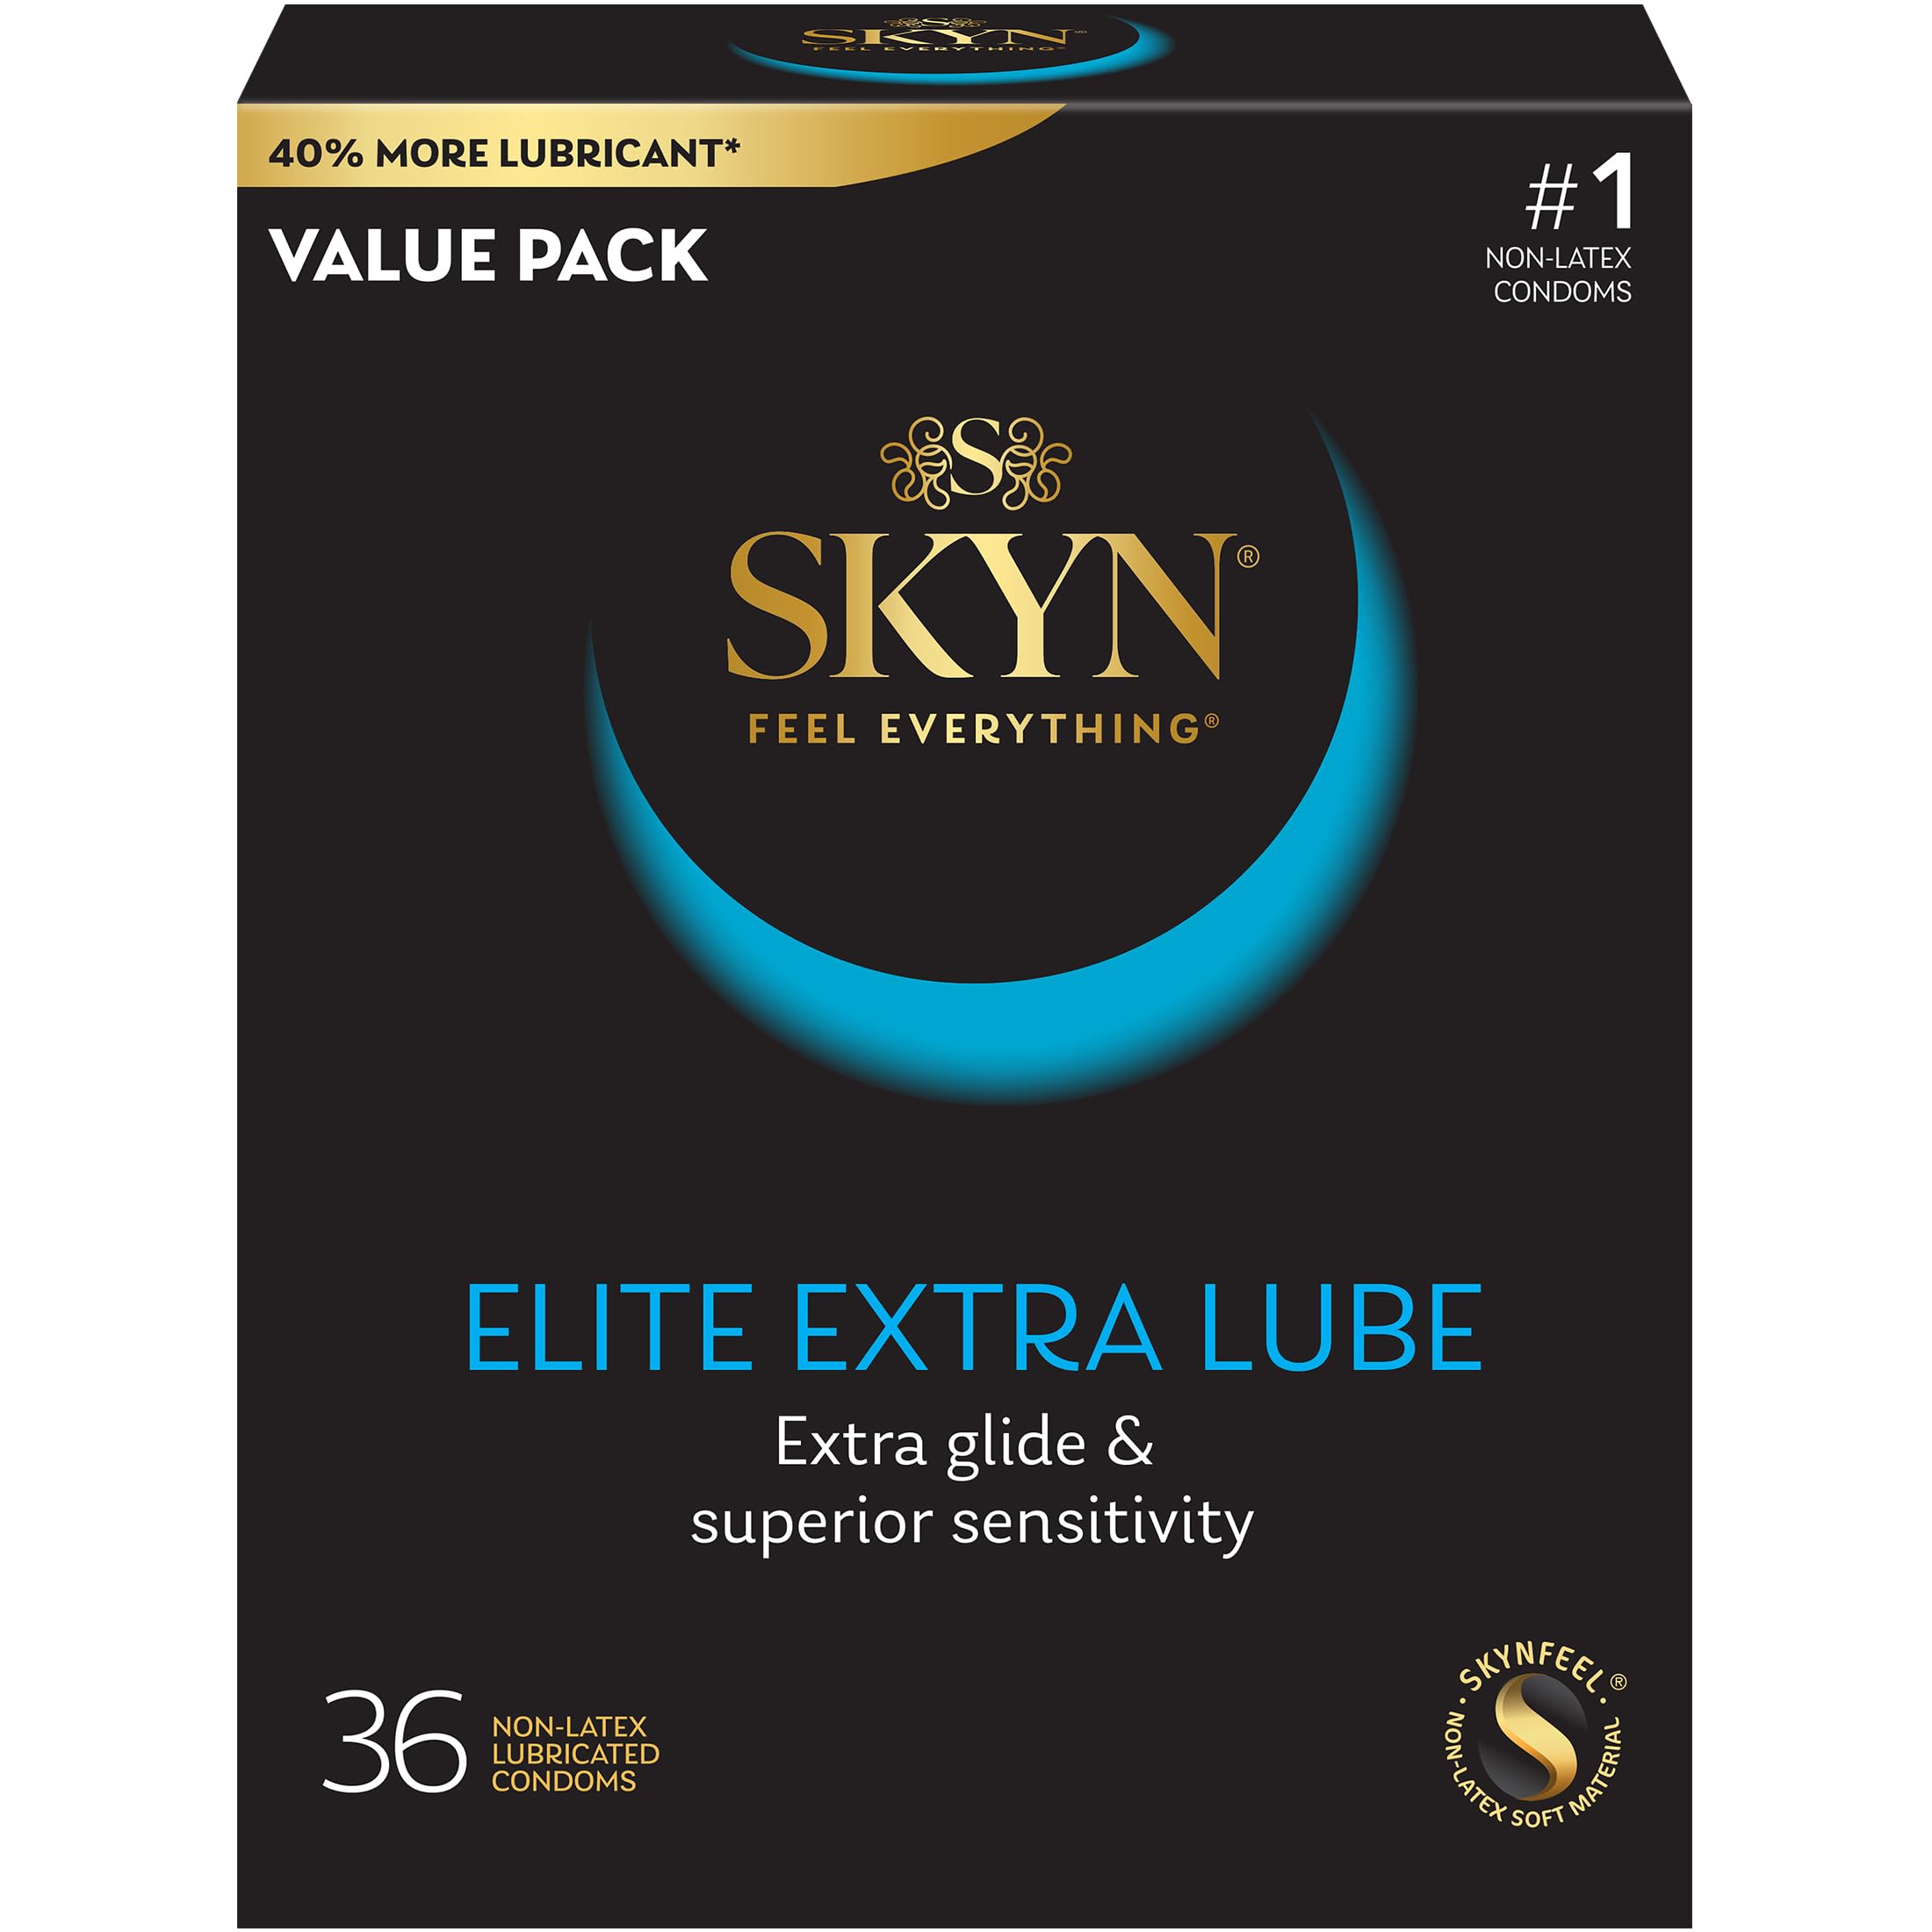 Bao cao su không chứa latex Skyn Elite Extra Lubricated Condoms